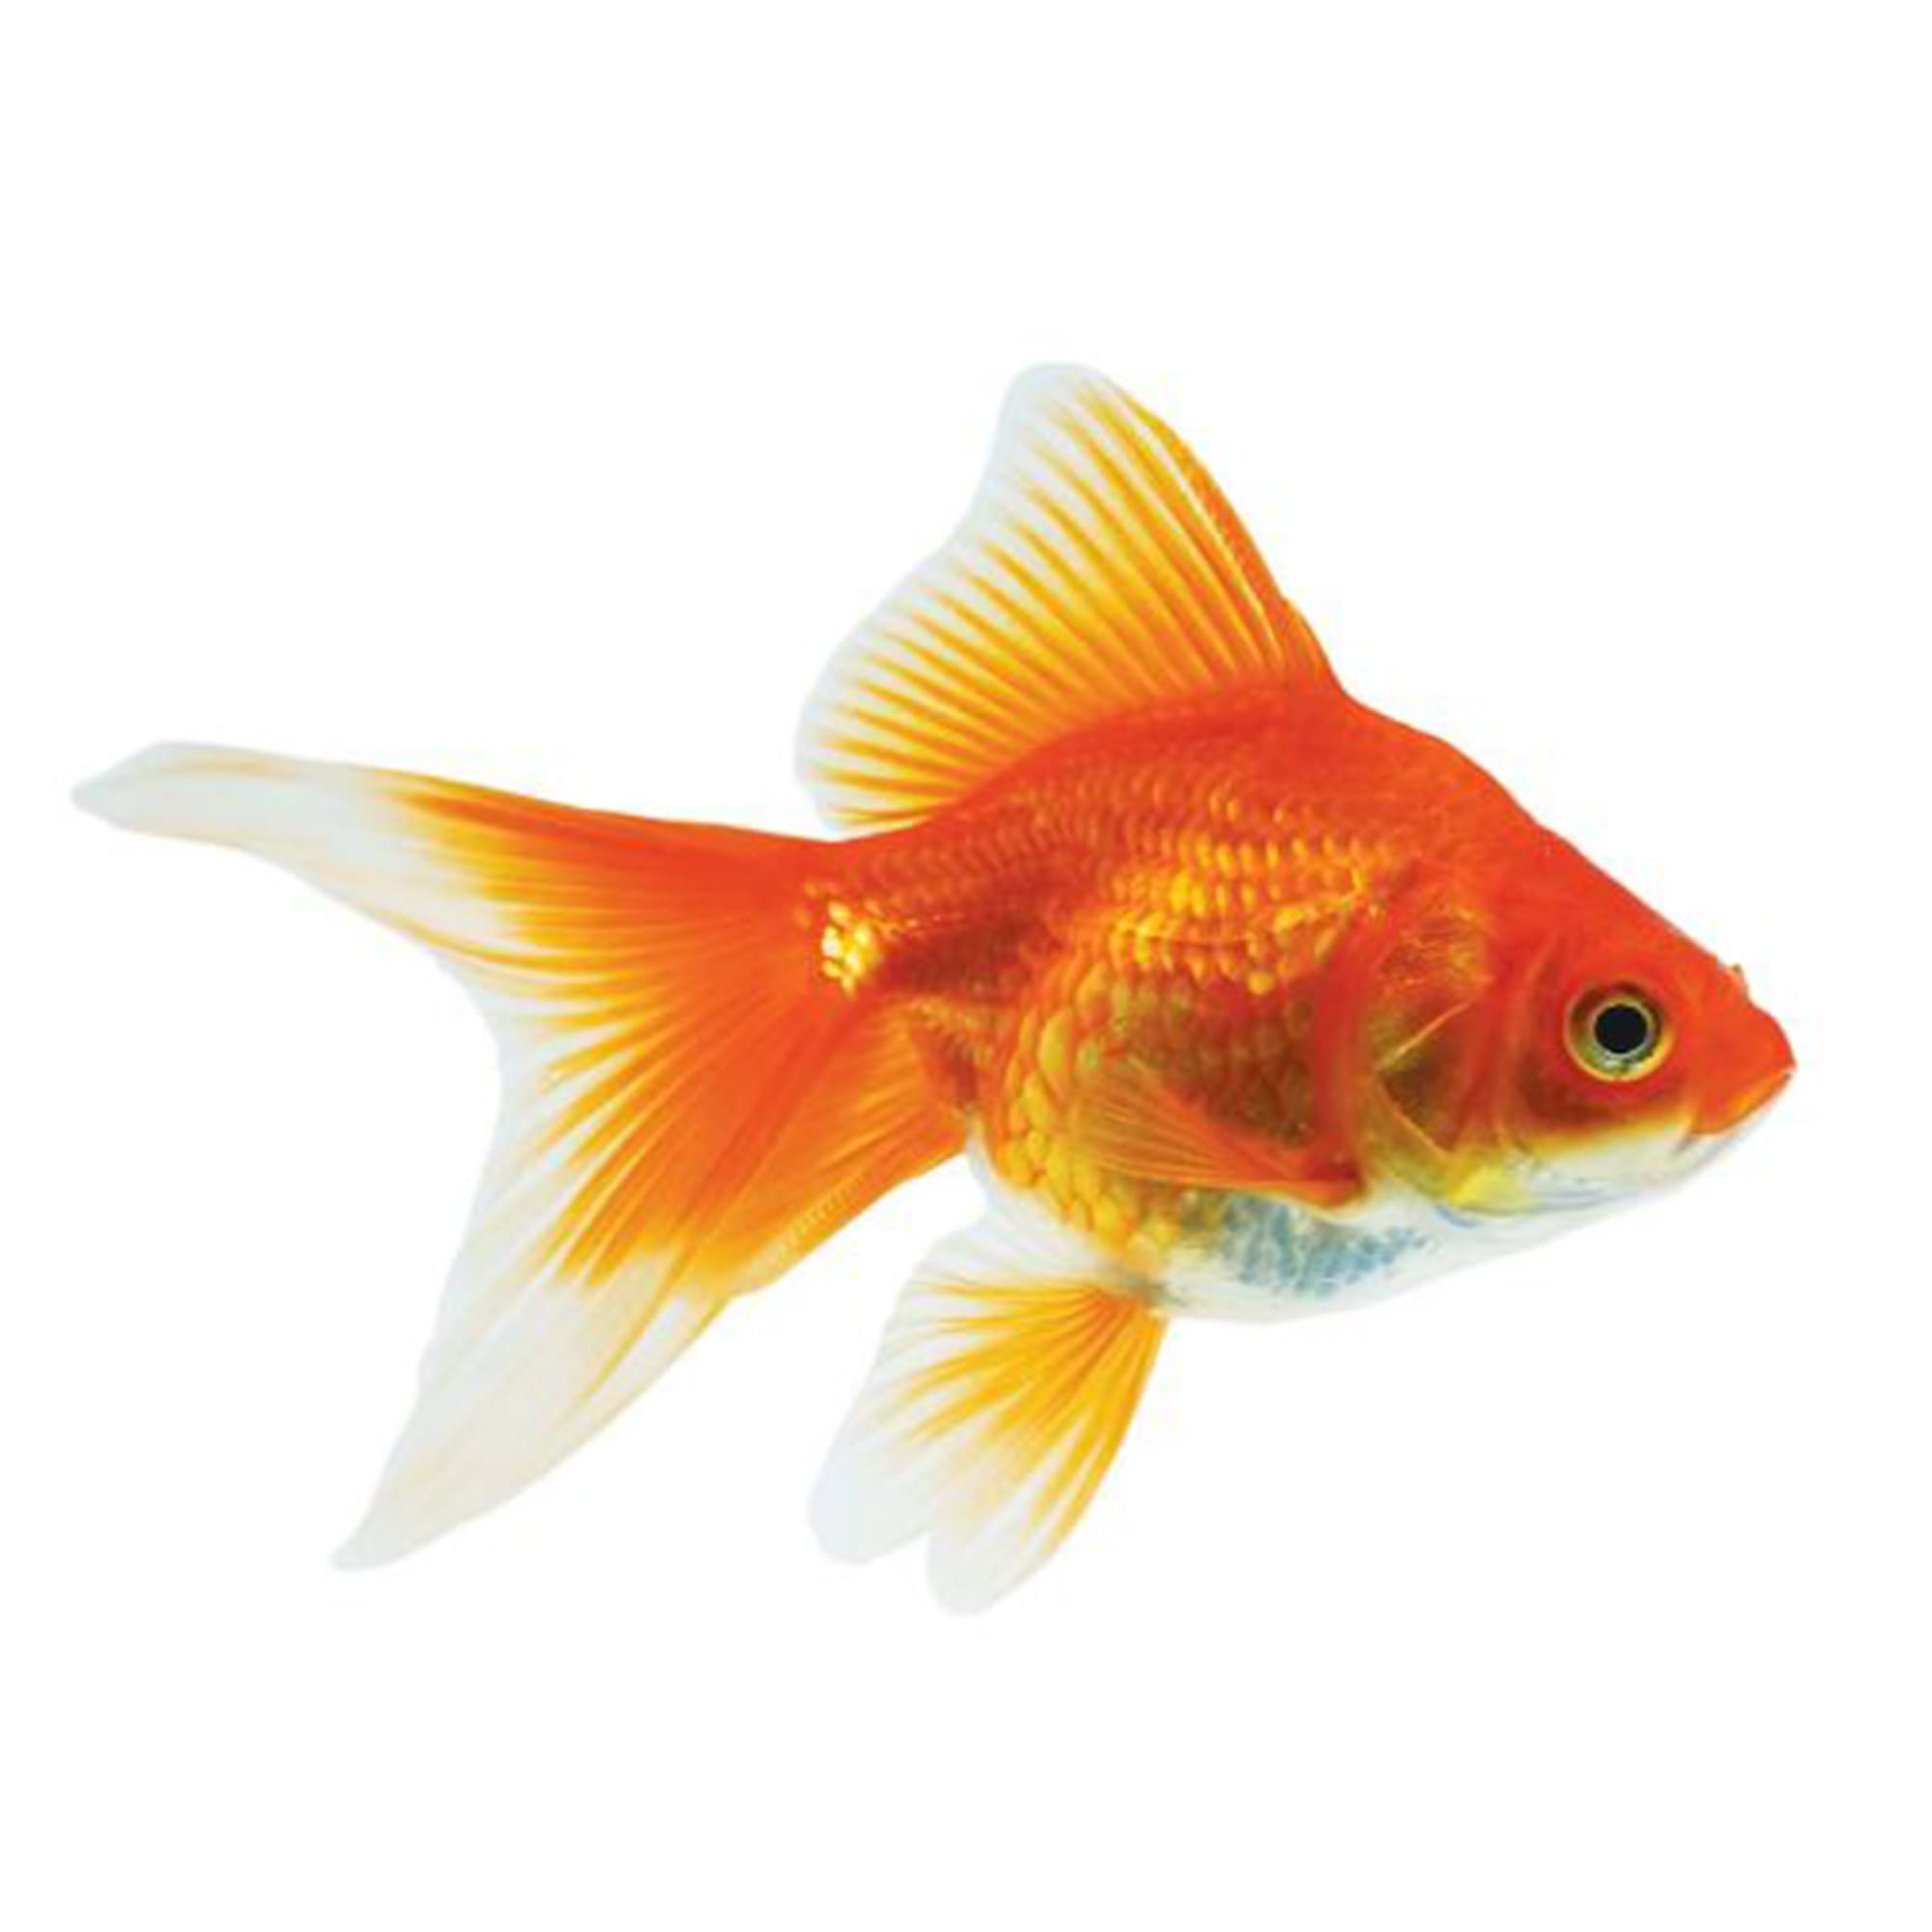 Red & White Ryukin Goldfish (Carassius auratus) - Large